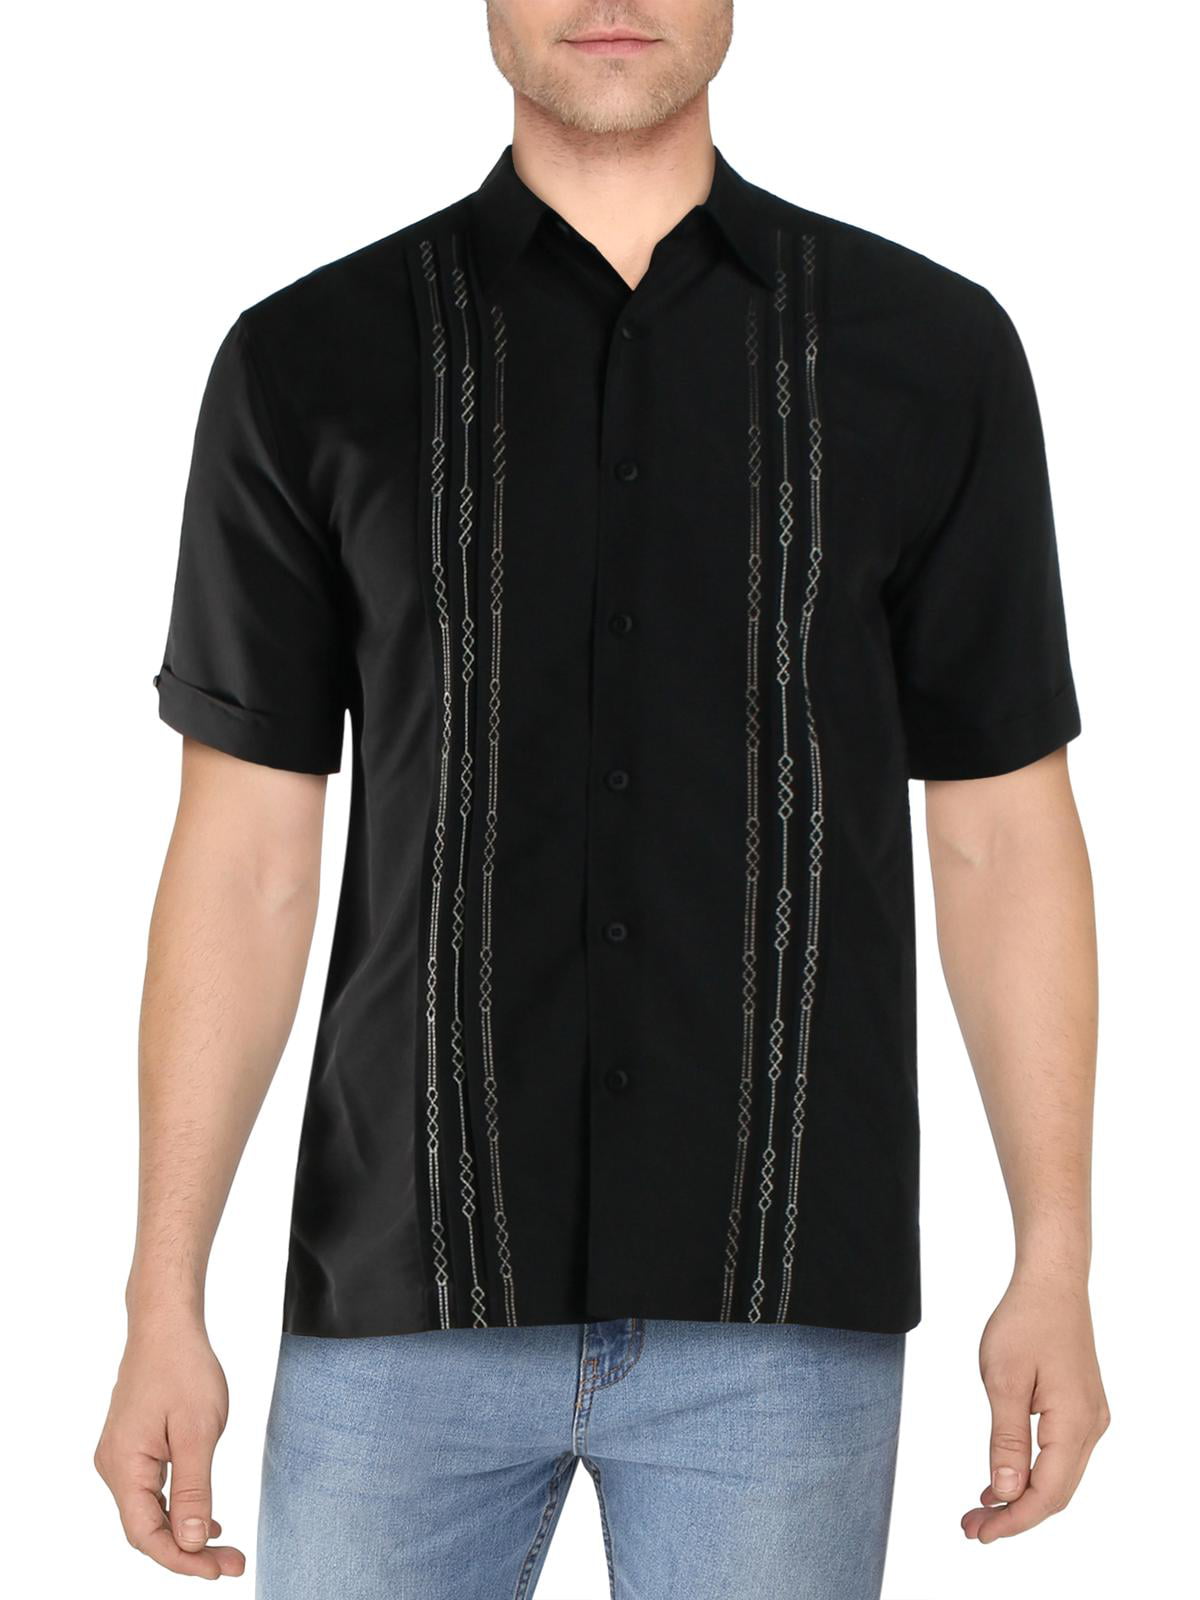 spy Fable Kosciuszko Cubavera Mens Embroidered Pintuck Button-Down Shirt - Walmart.com